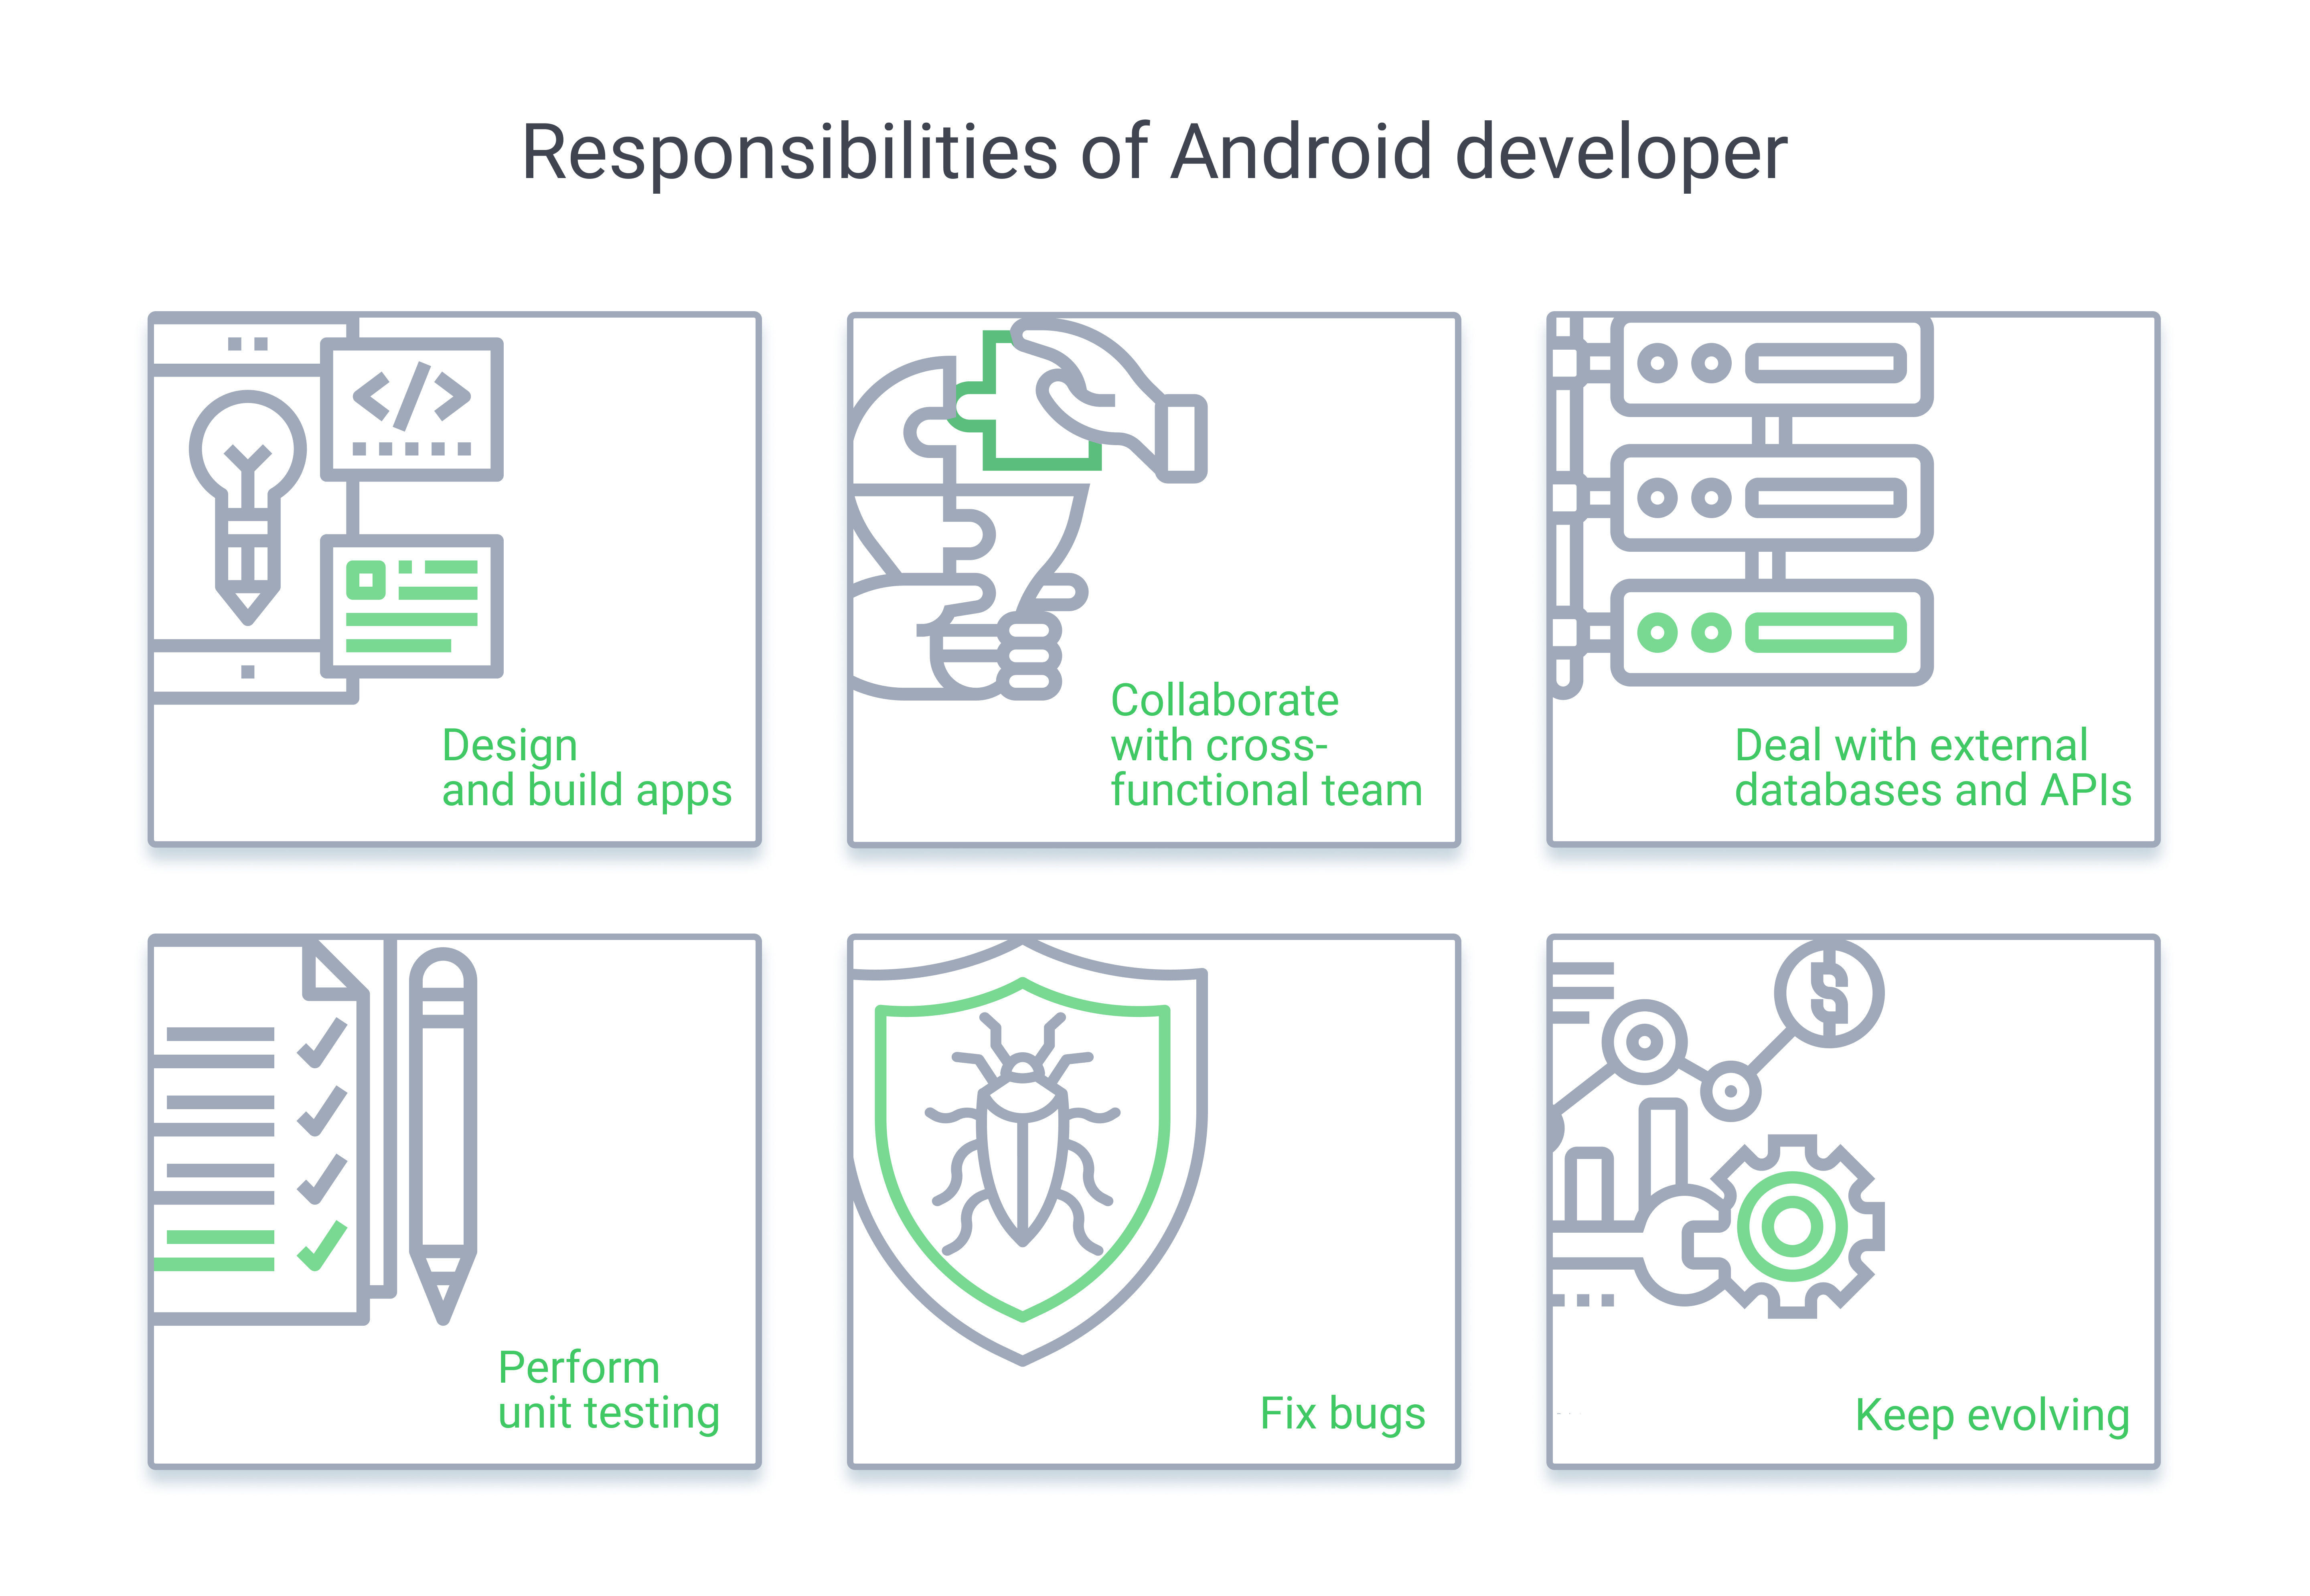 Android developer core responsibilities